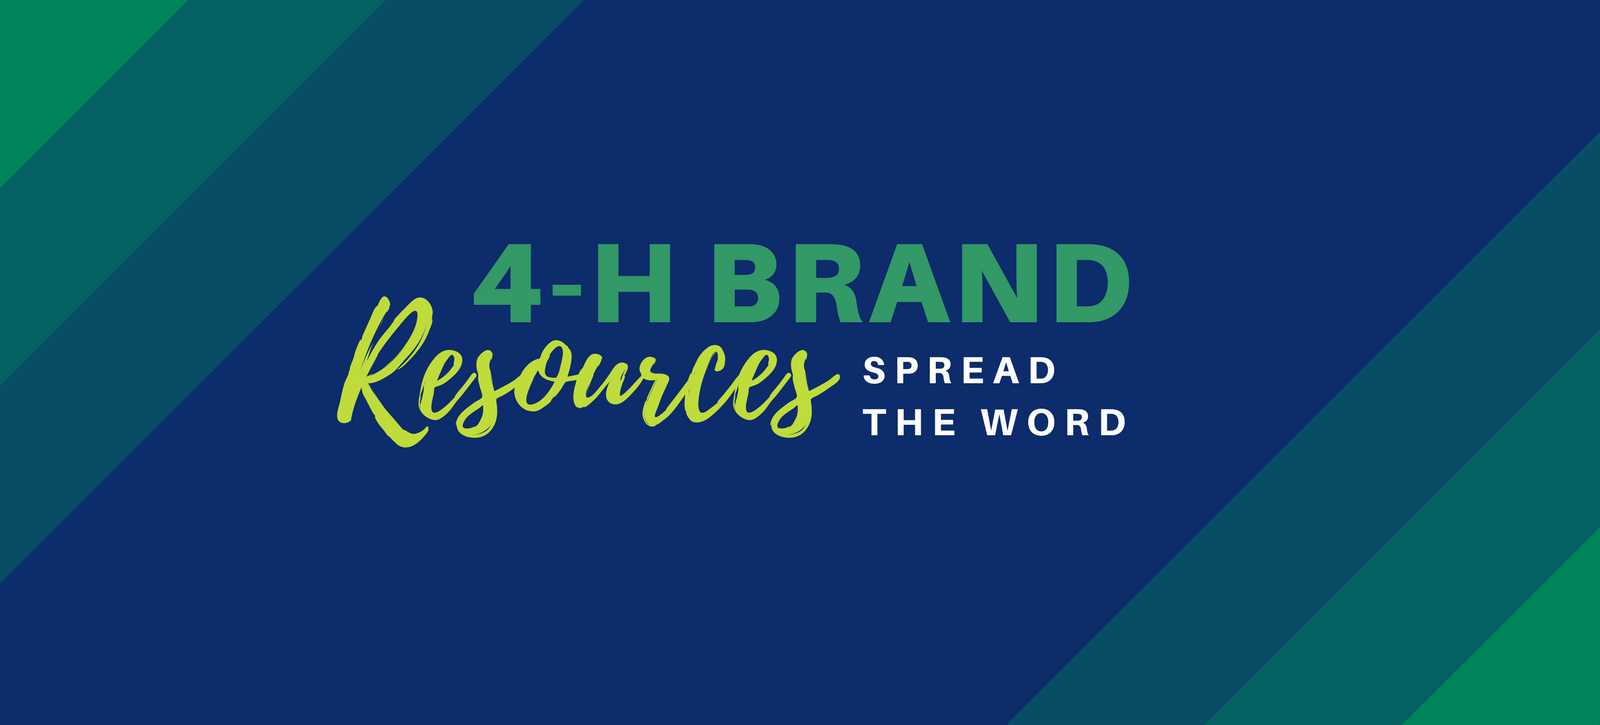 4-H brand resources banner